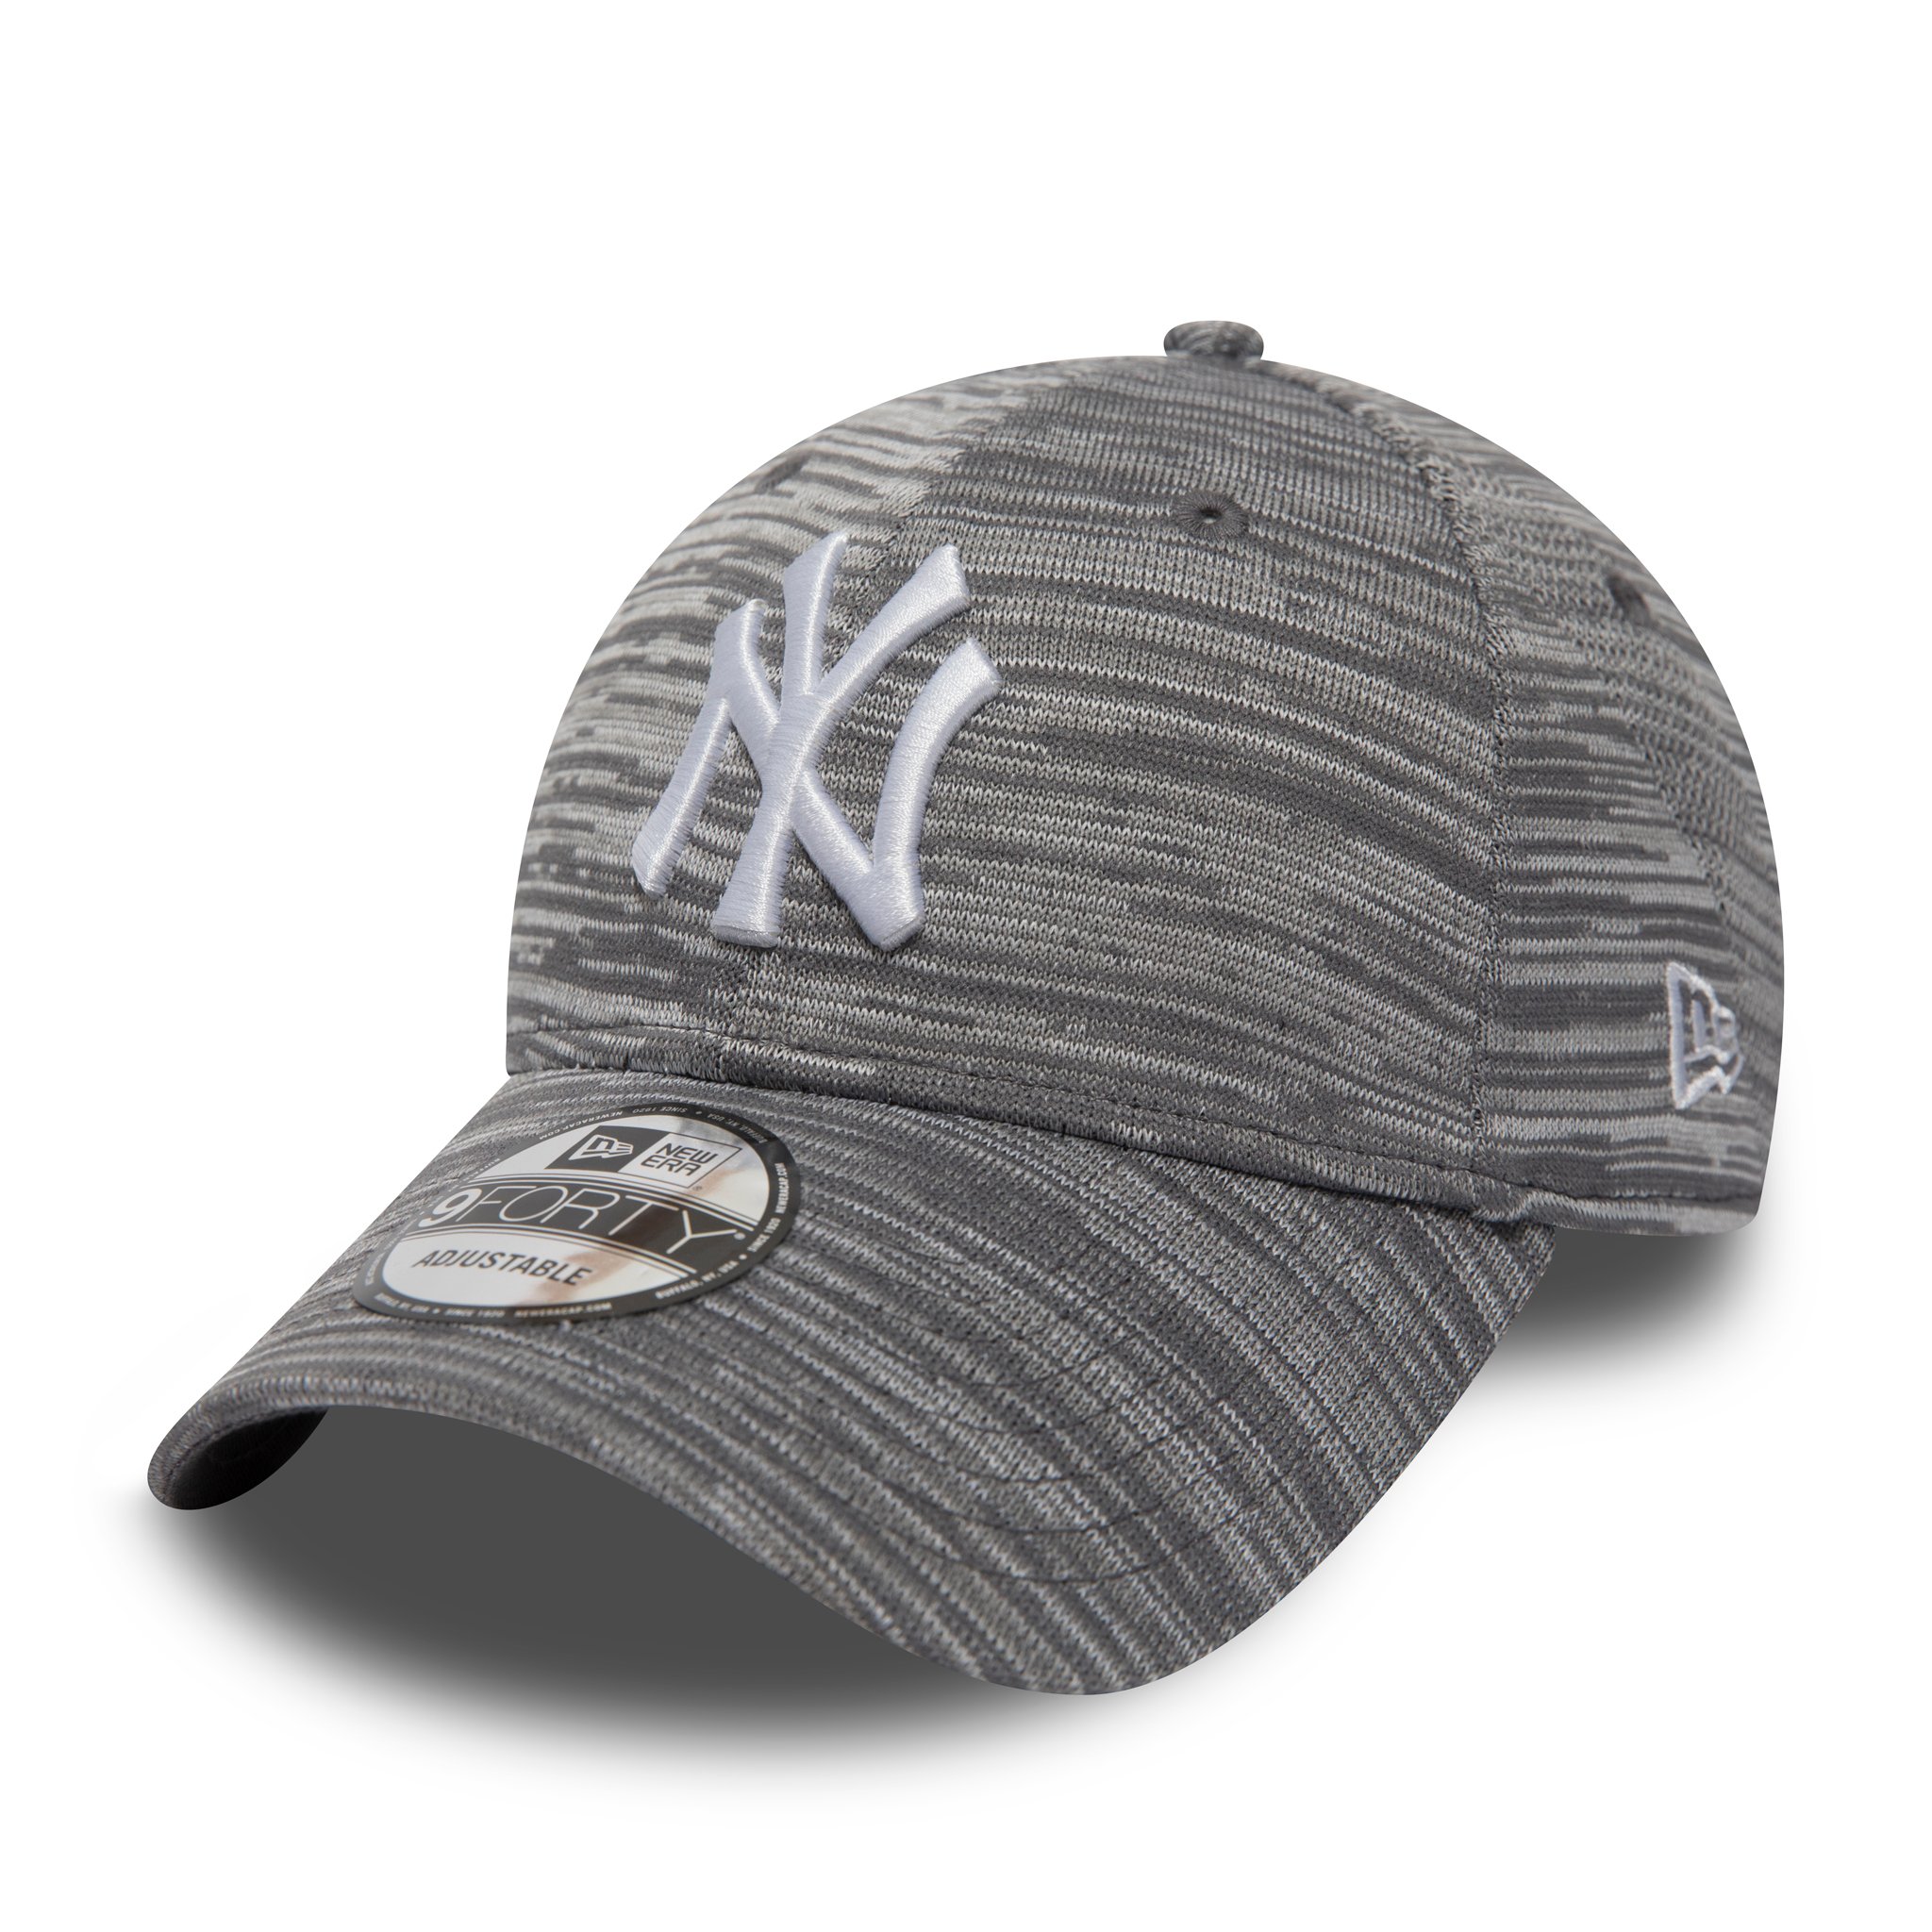 New York Yankees 9FORTY-Kappe in Grau – Engineered Fit